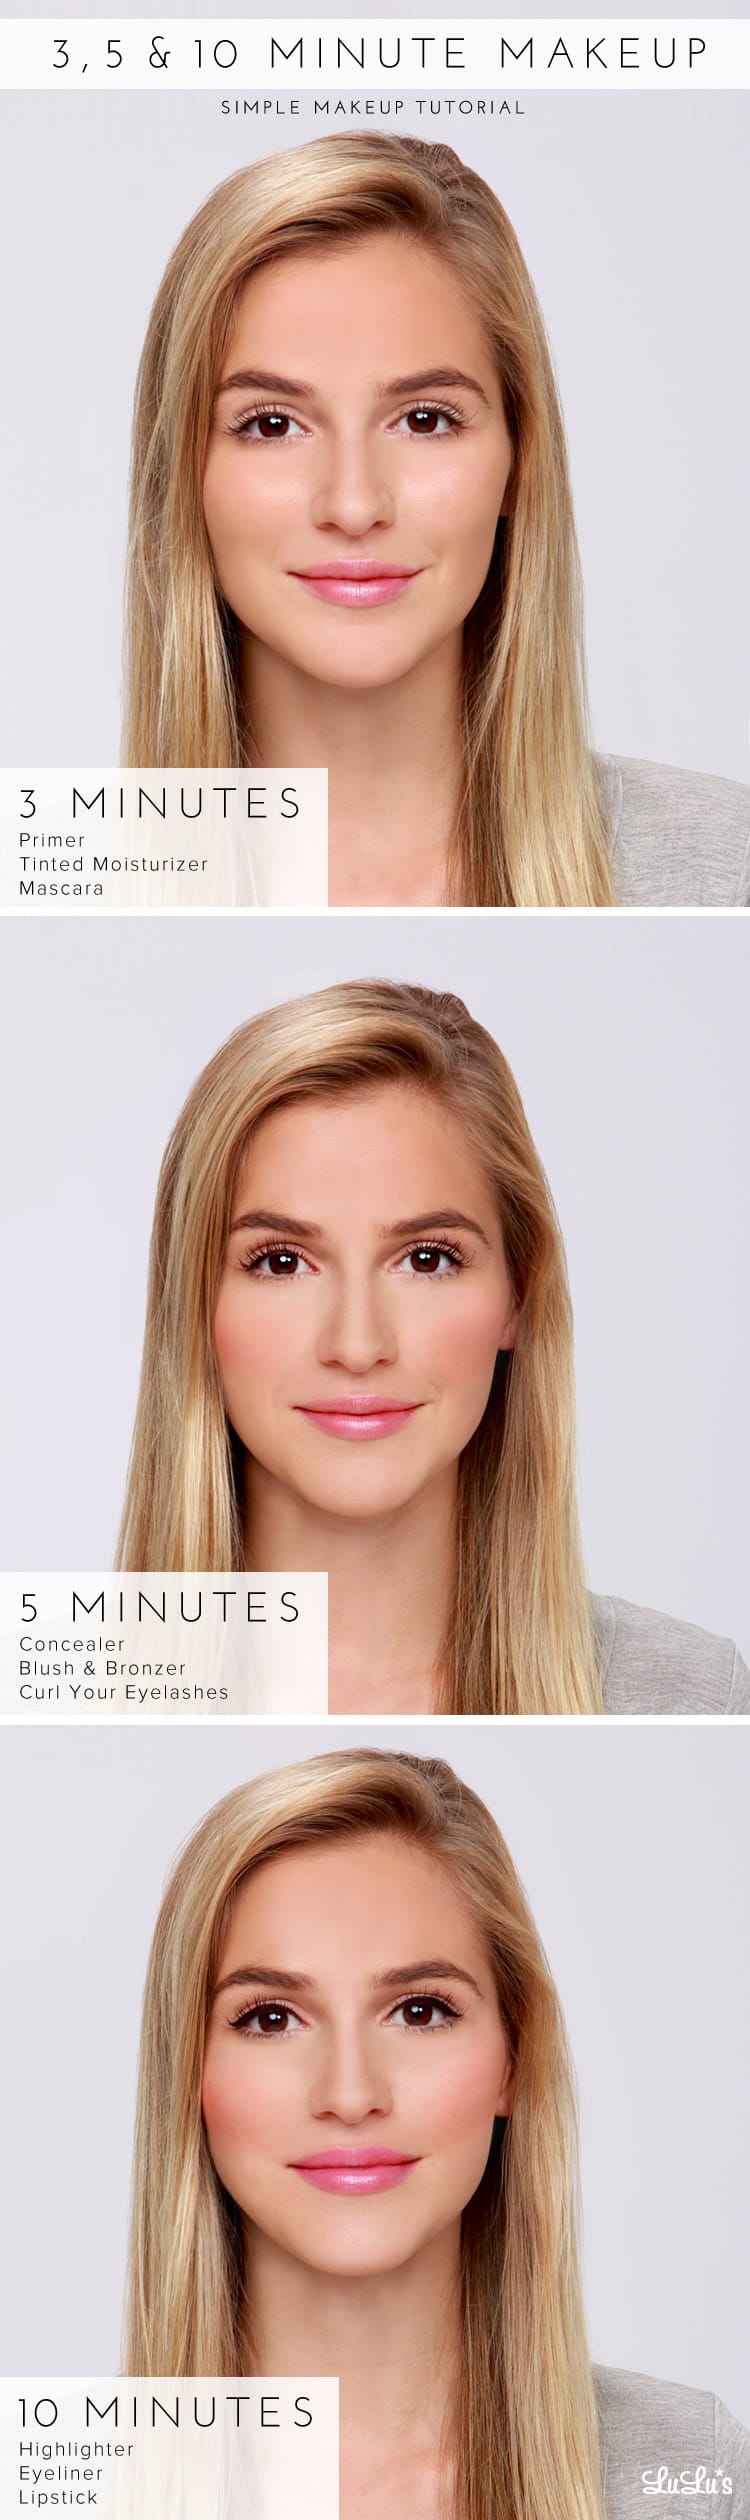 Lulus How-To: 3, 5 & 10 Minute Makeup Tutorial - Lulus.com Fashion Blog